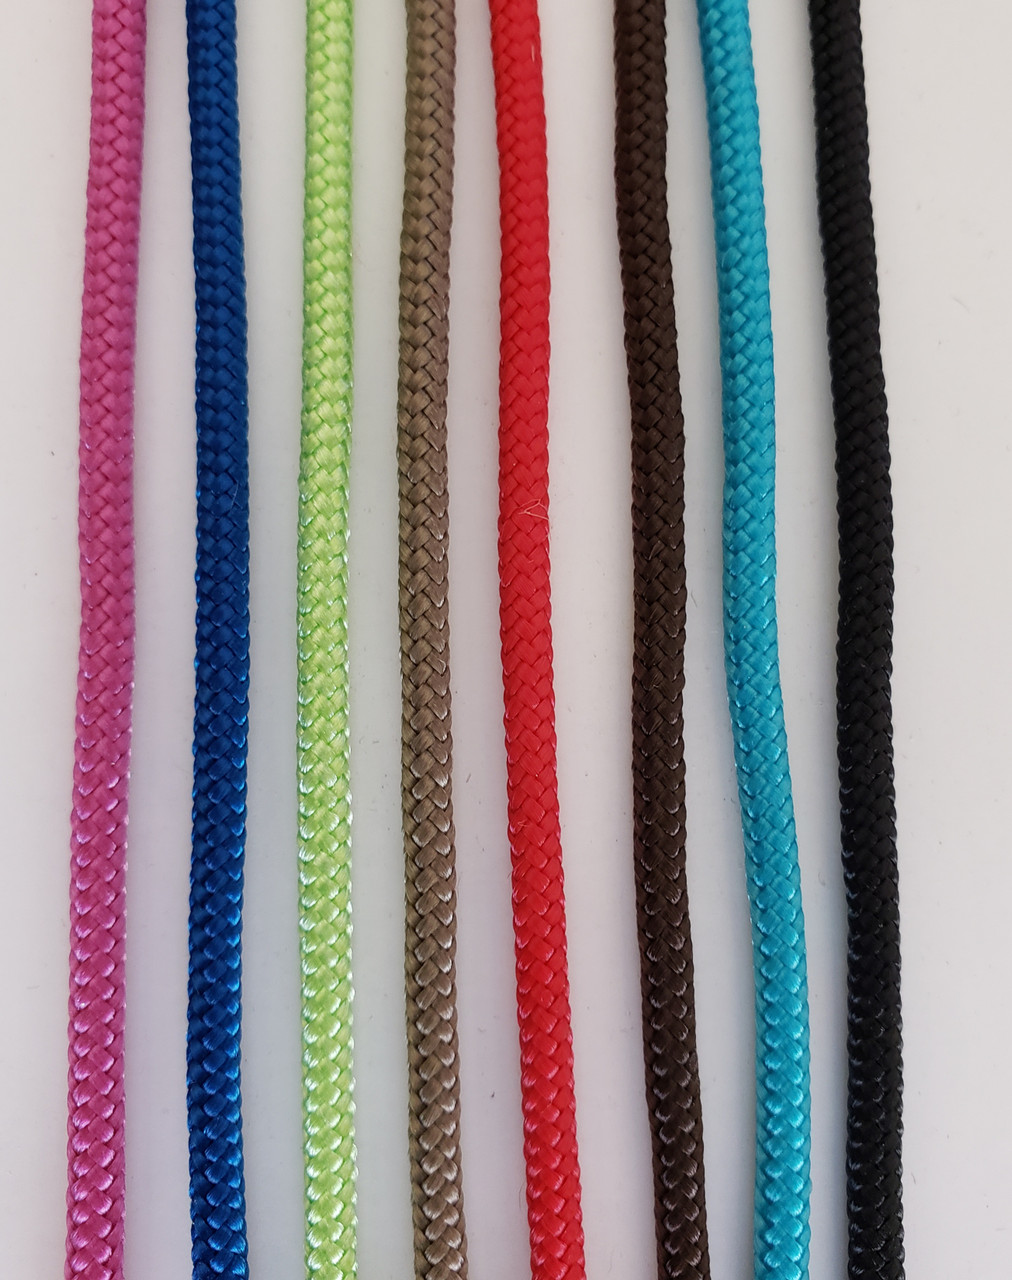 2 noseband knot Black rope halter TESWA braided black/baby blue 